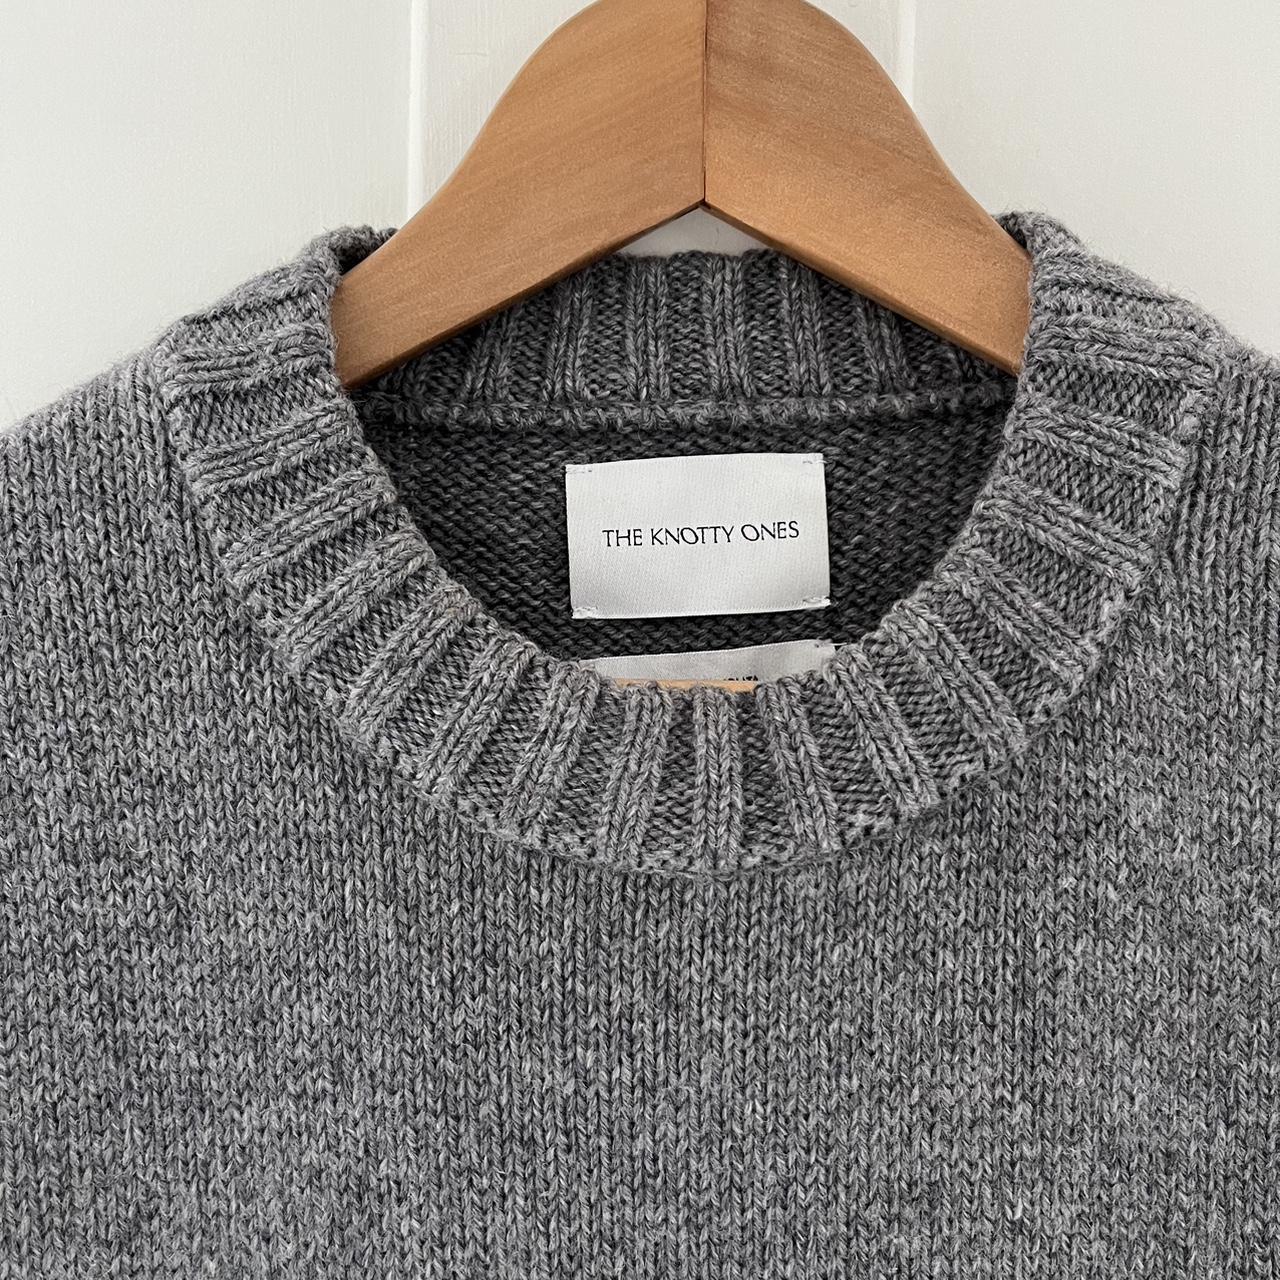 The Knotty Ones merino wool sweater vest - Depop